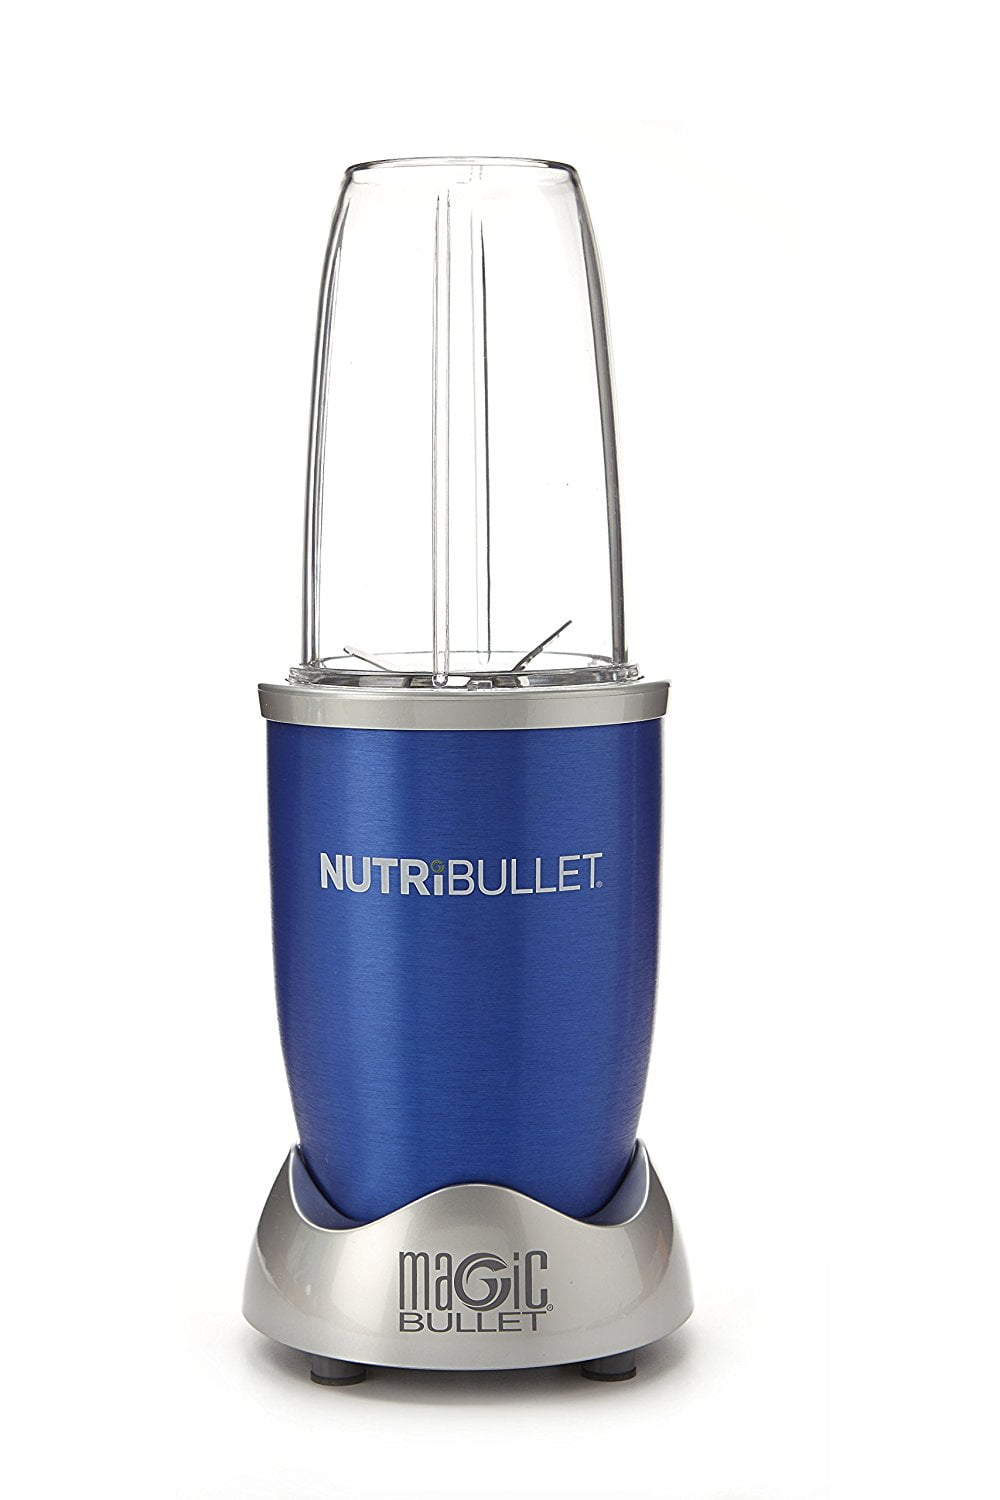 Magic Bullet NutriBullet Nutrition Extraction 12-Piece Mixer, Blender